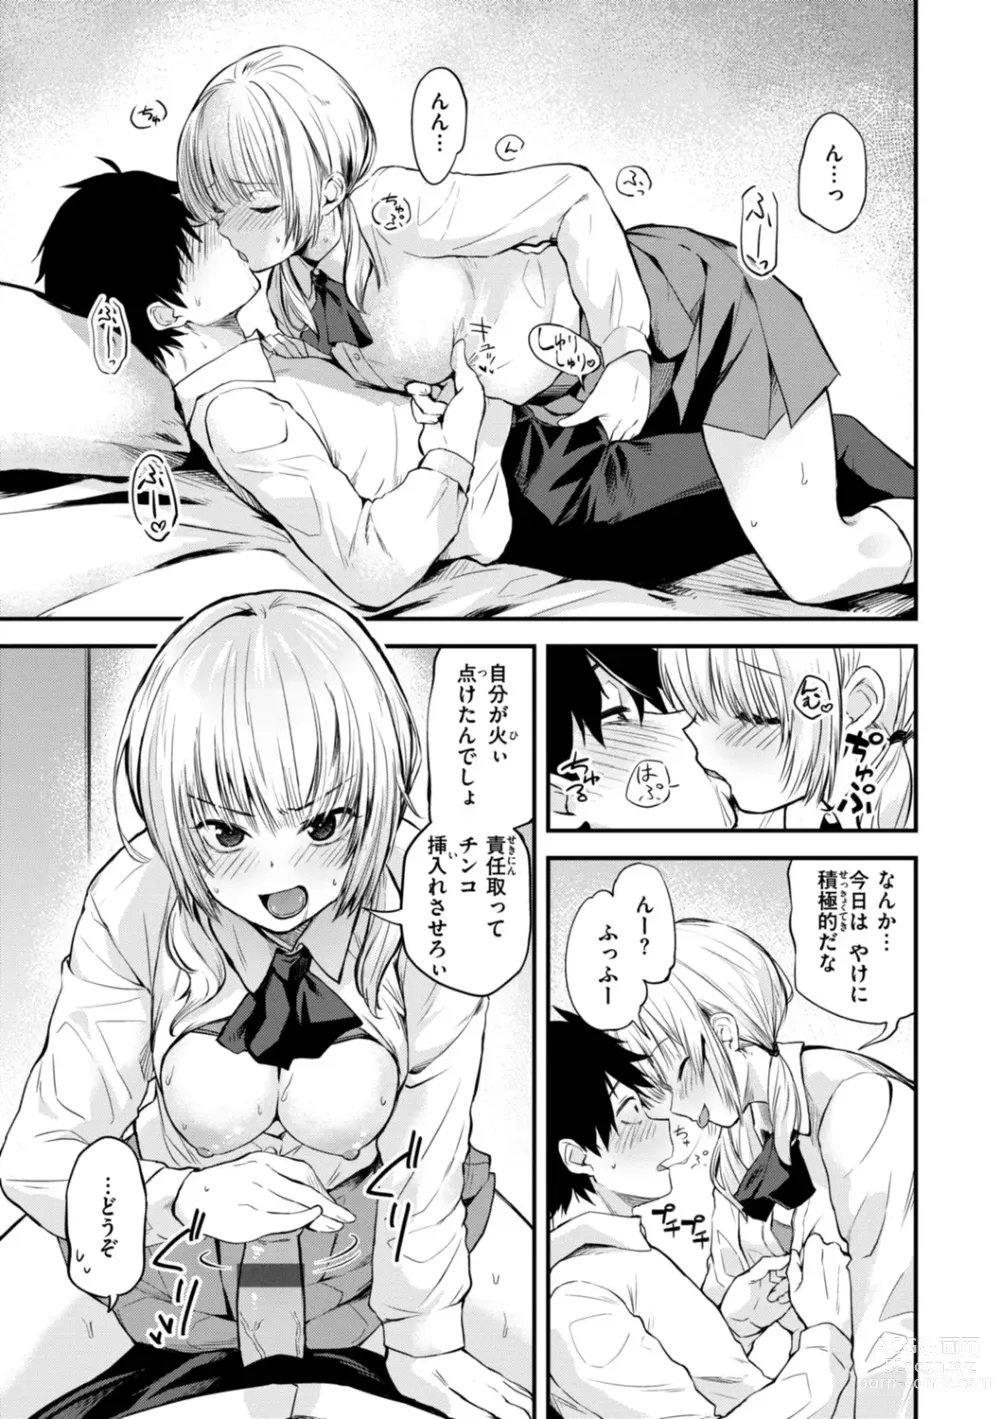 Page 31 of manga Jaa, Ecchi Shichau? - Shall we have H then?